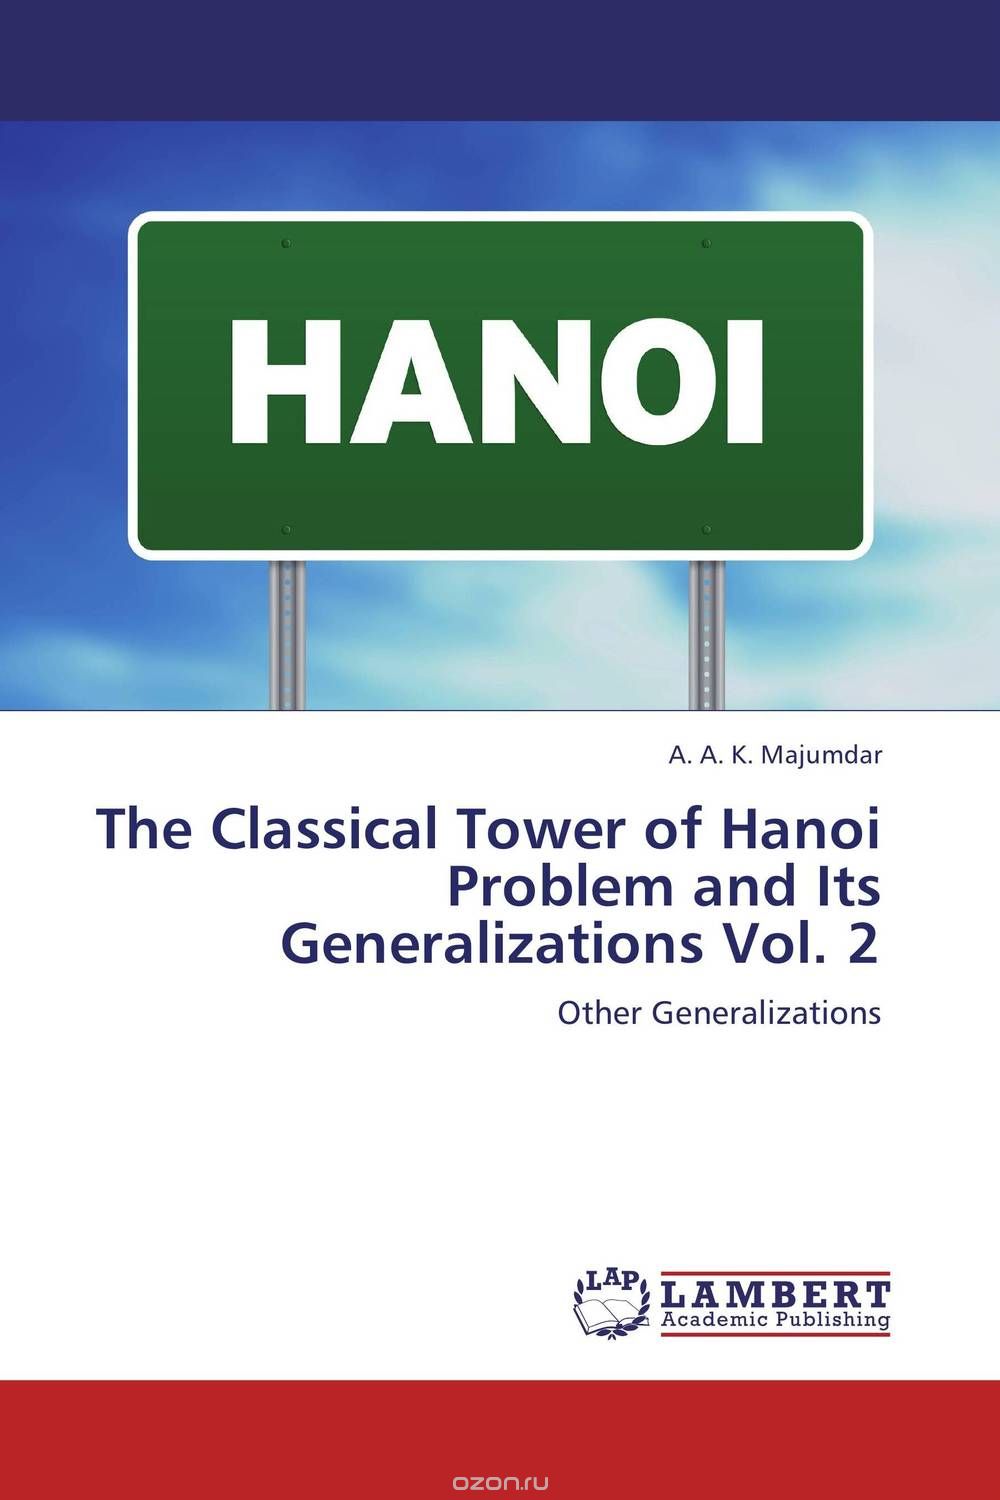 Скачать книгу "The Classical Tower of Hanoi Problem and Its Generalizations Vol. 2"